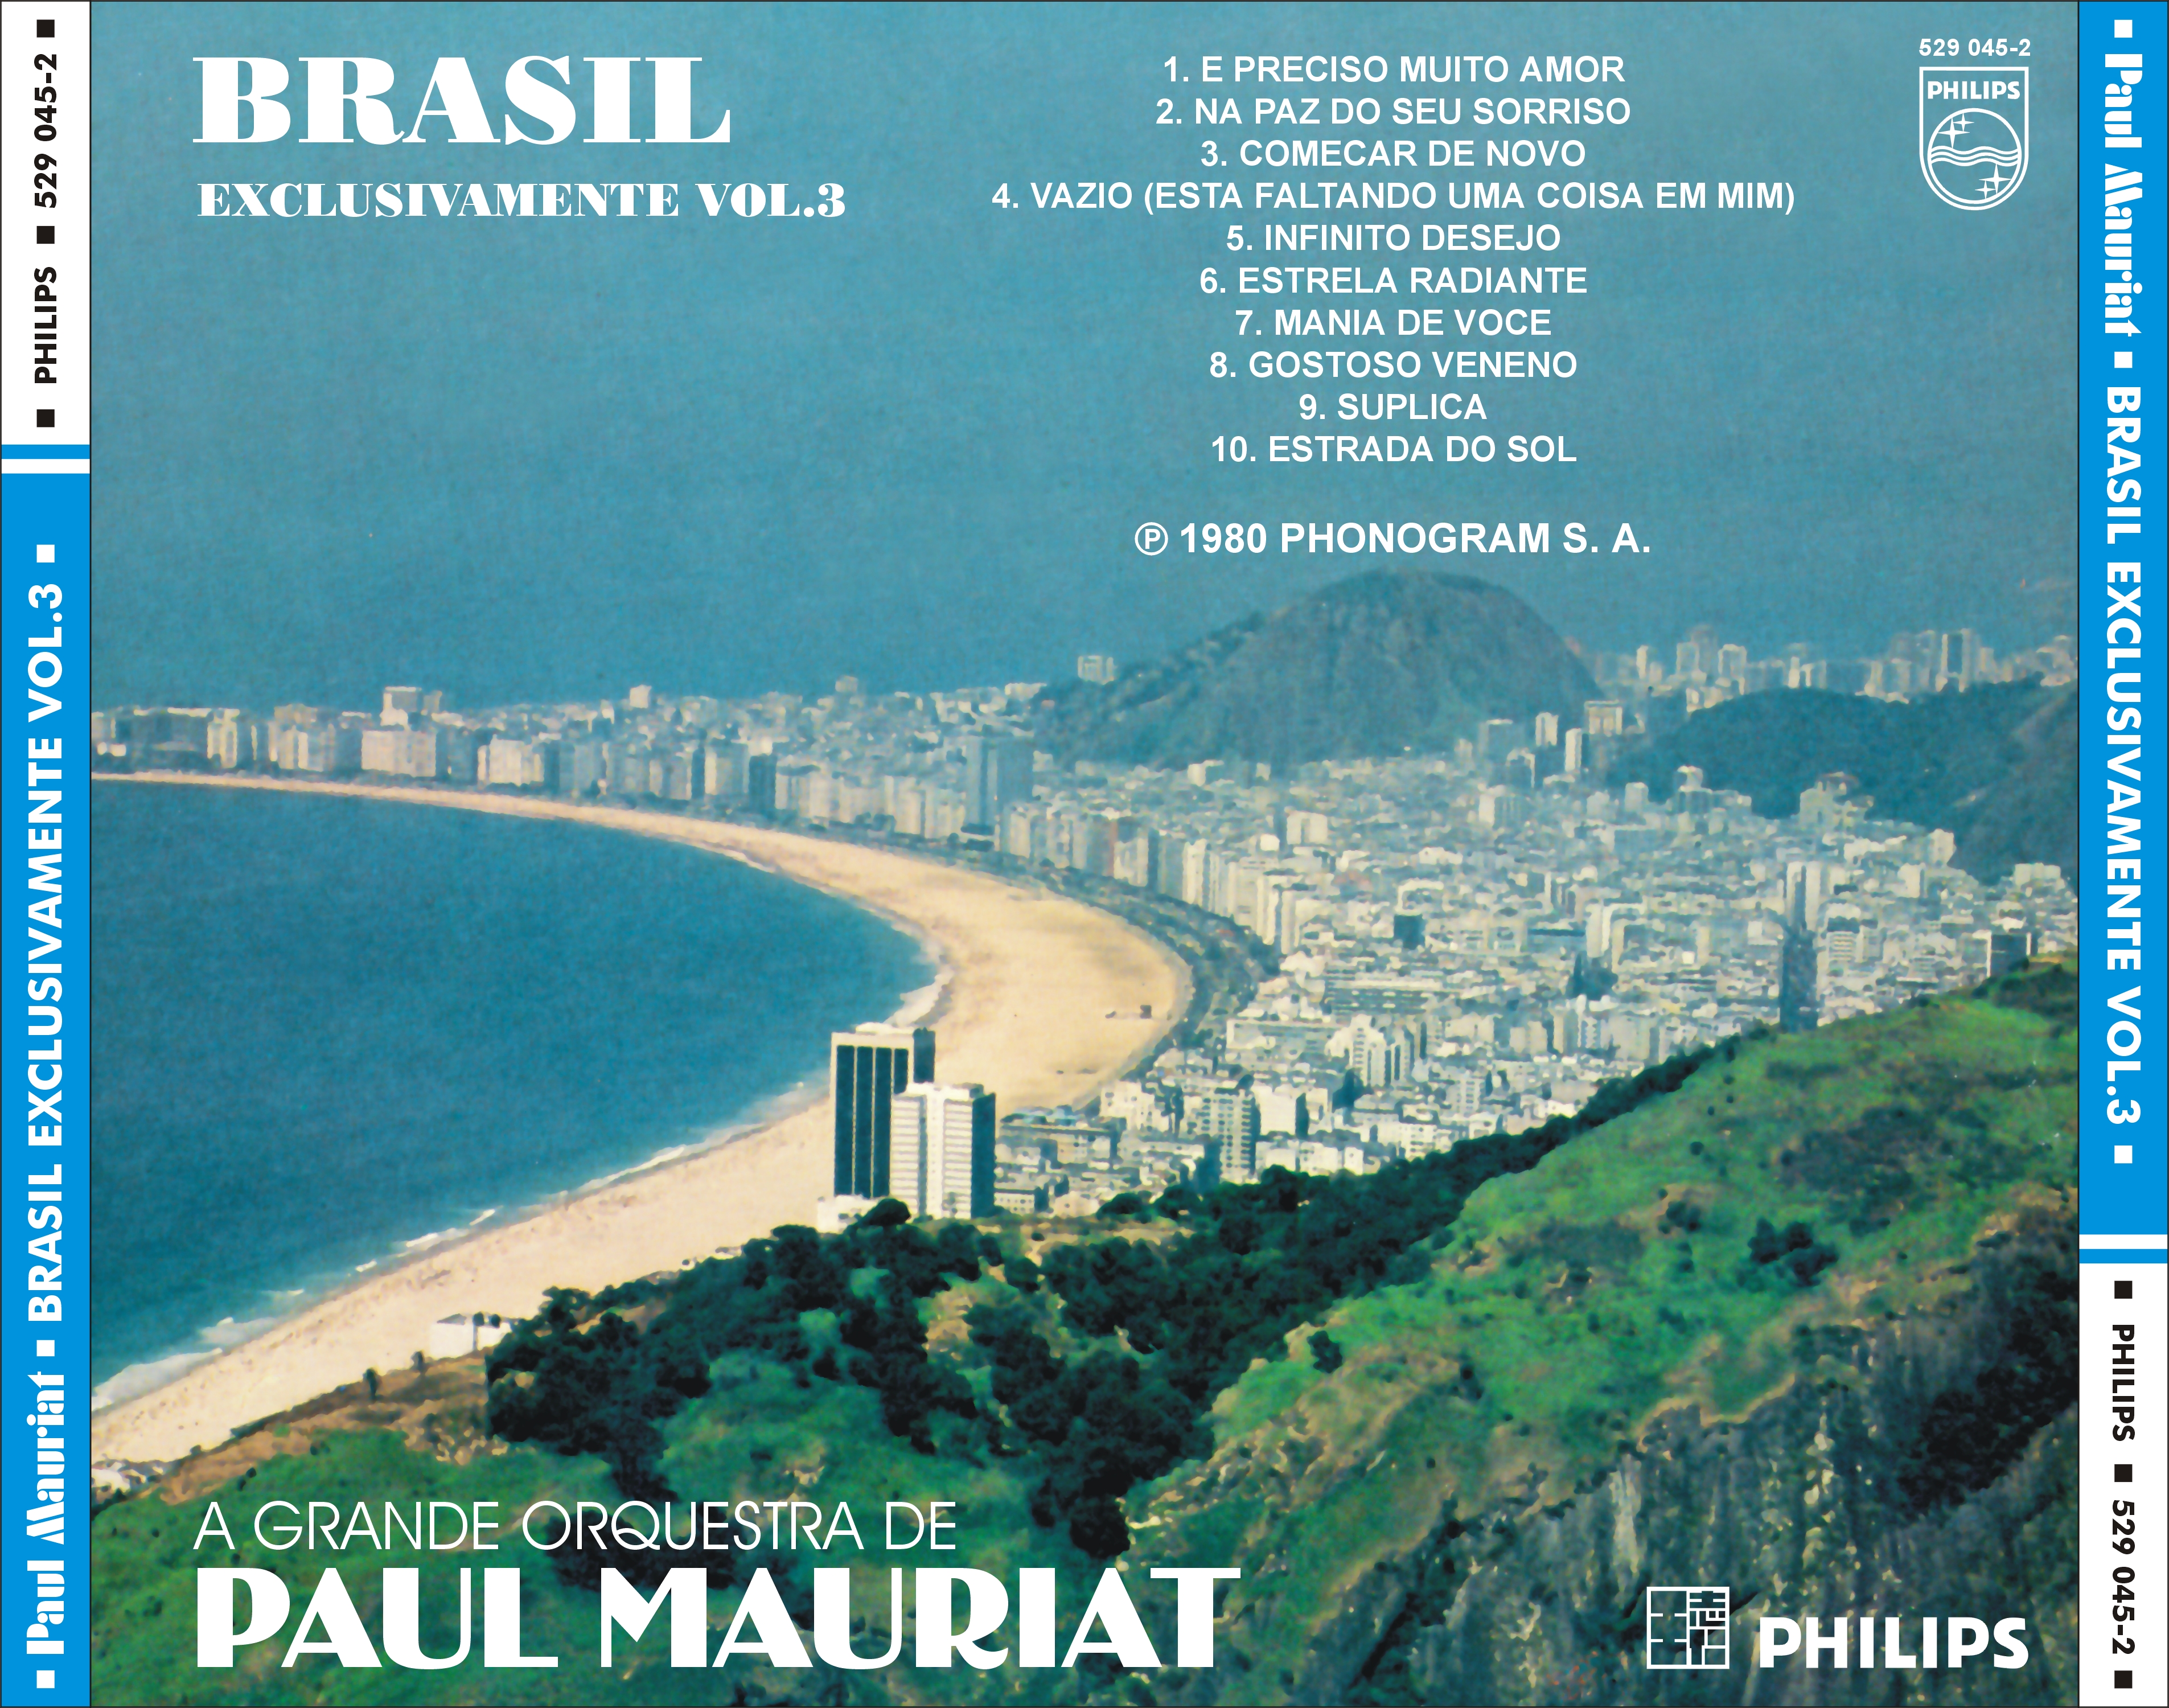 Paul mauriat mp3. Paul Mauriat Brasilia Carnaval 1977. Paul Mauriat 1980. Paul Mauriat Brasil exclusivamente Vol. 2. Paul Mauriat - Windy (1986).